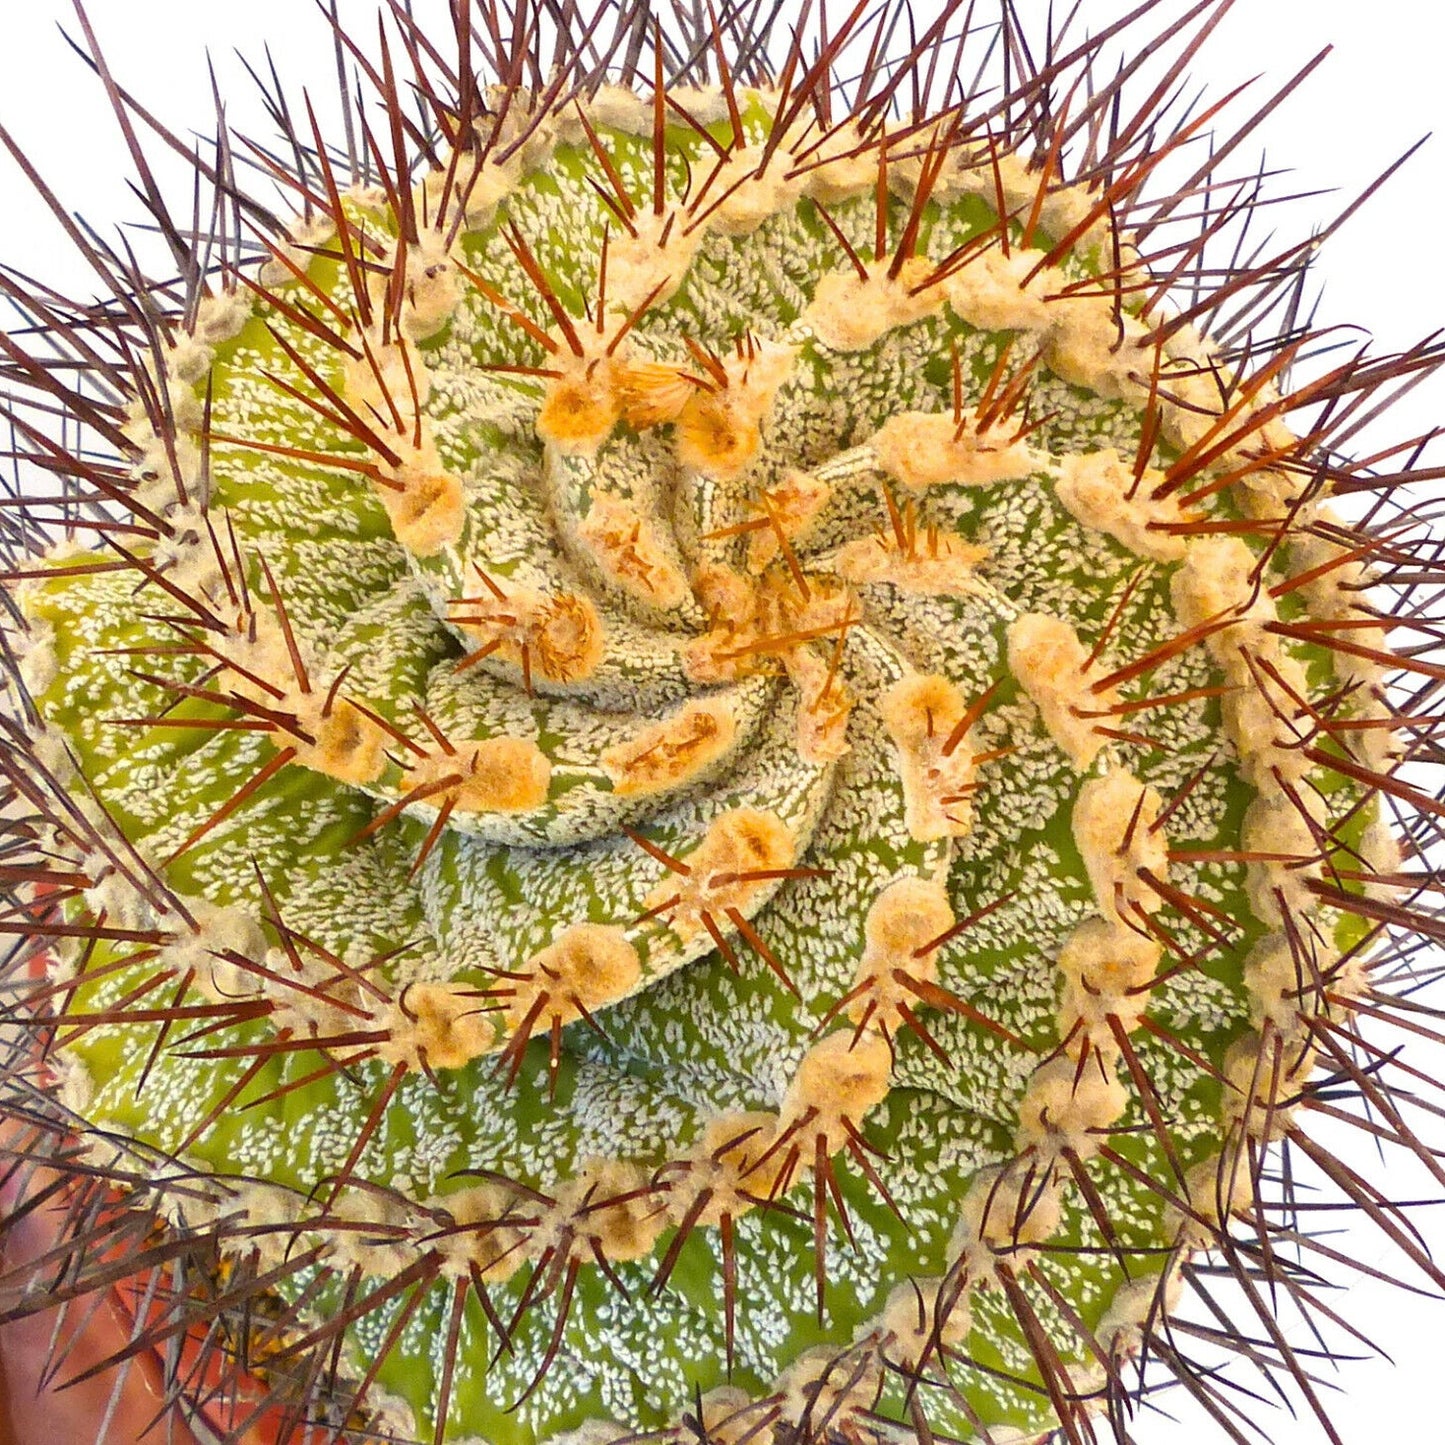 Astrophytum ornatum form spiralis SEMI